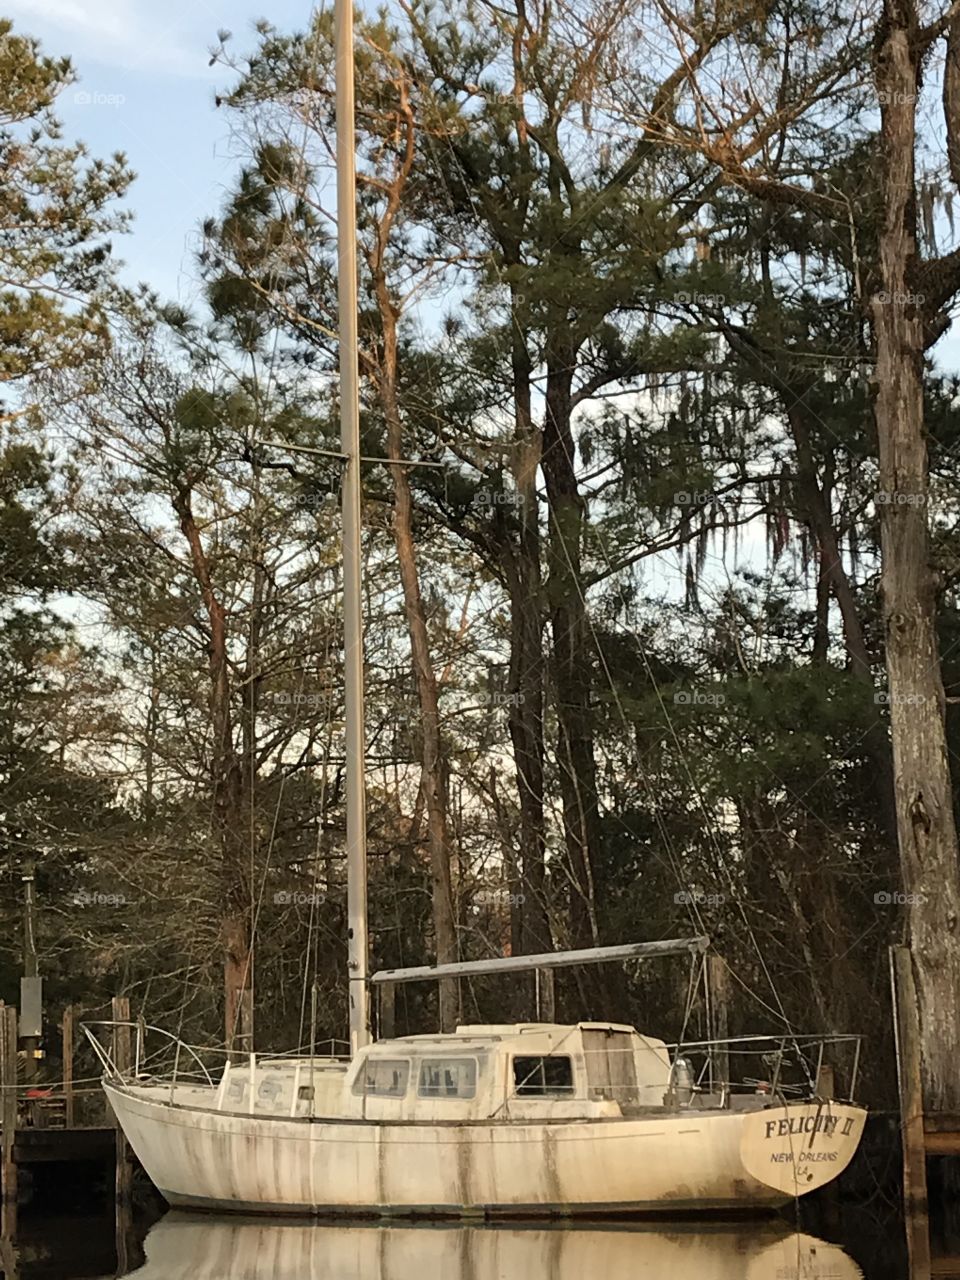 Sailboat in the bayou